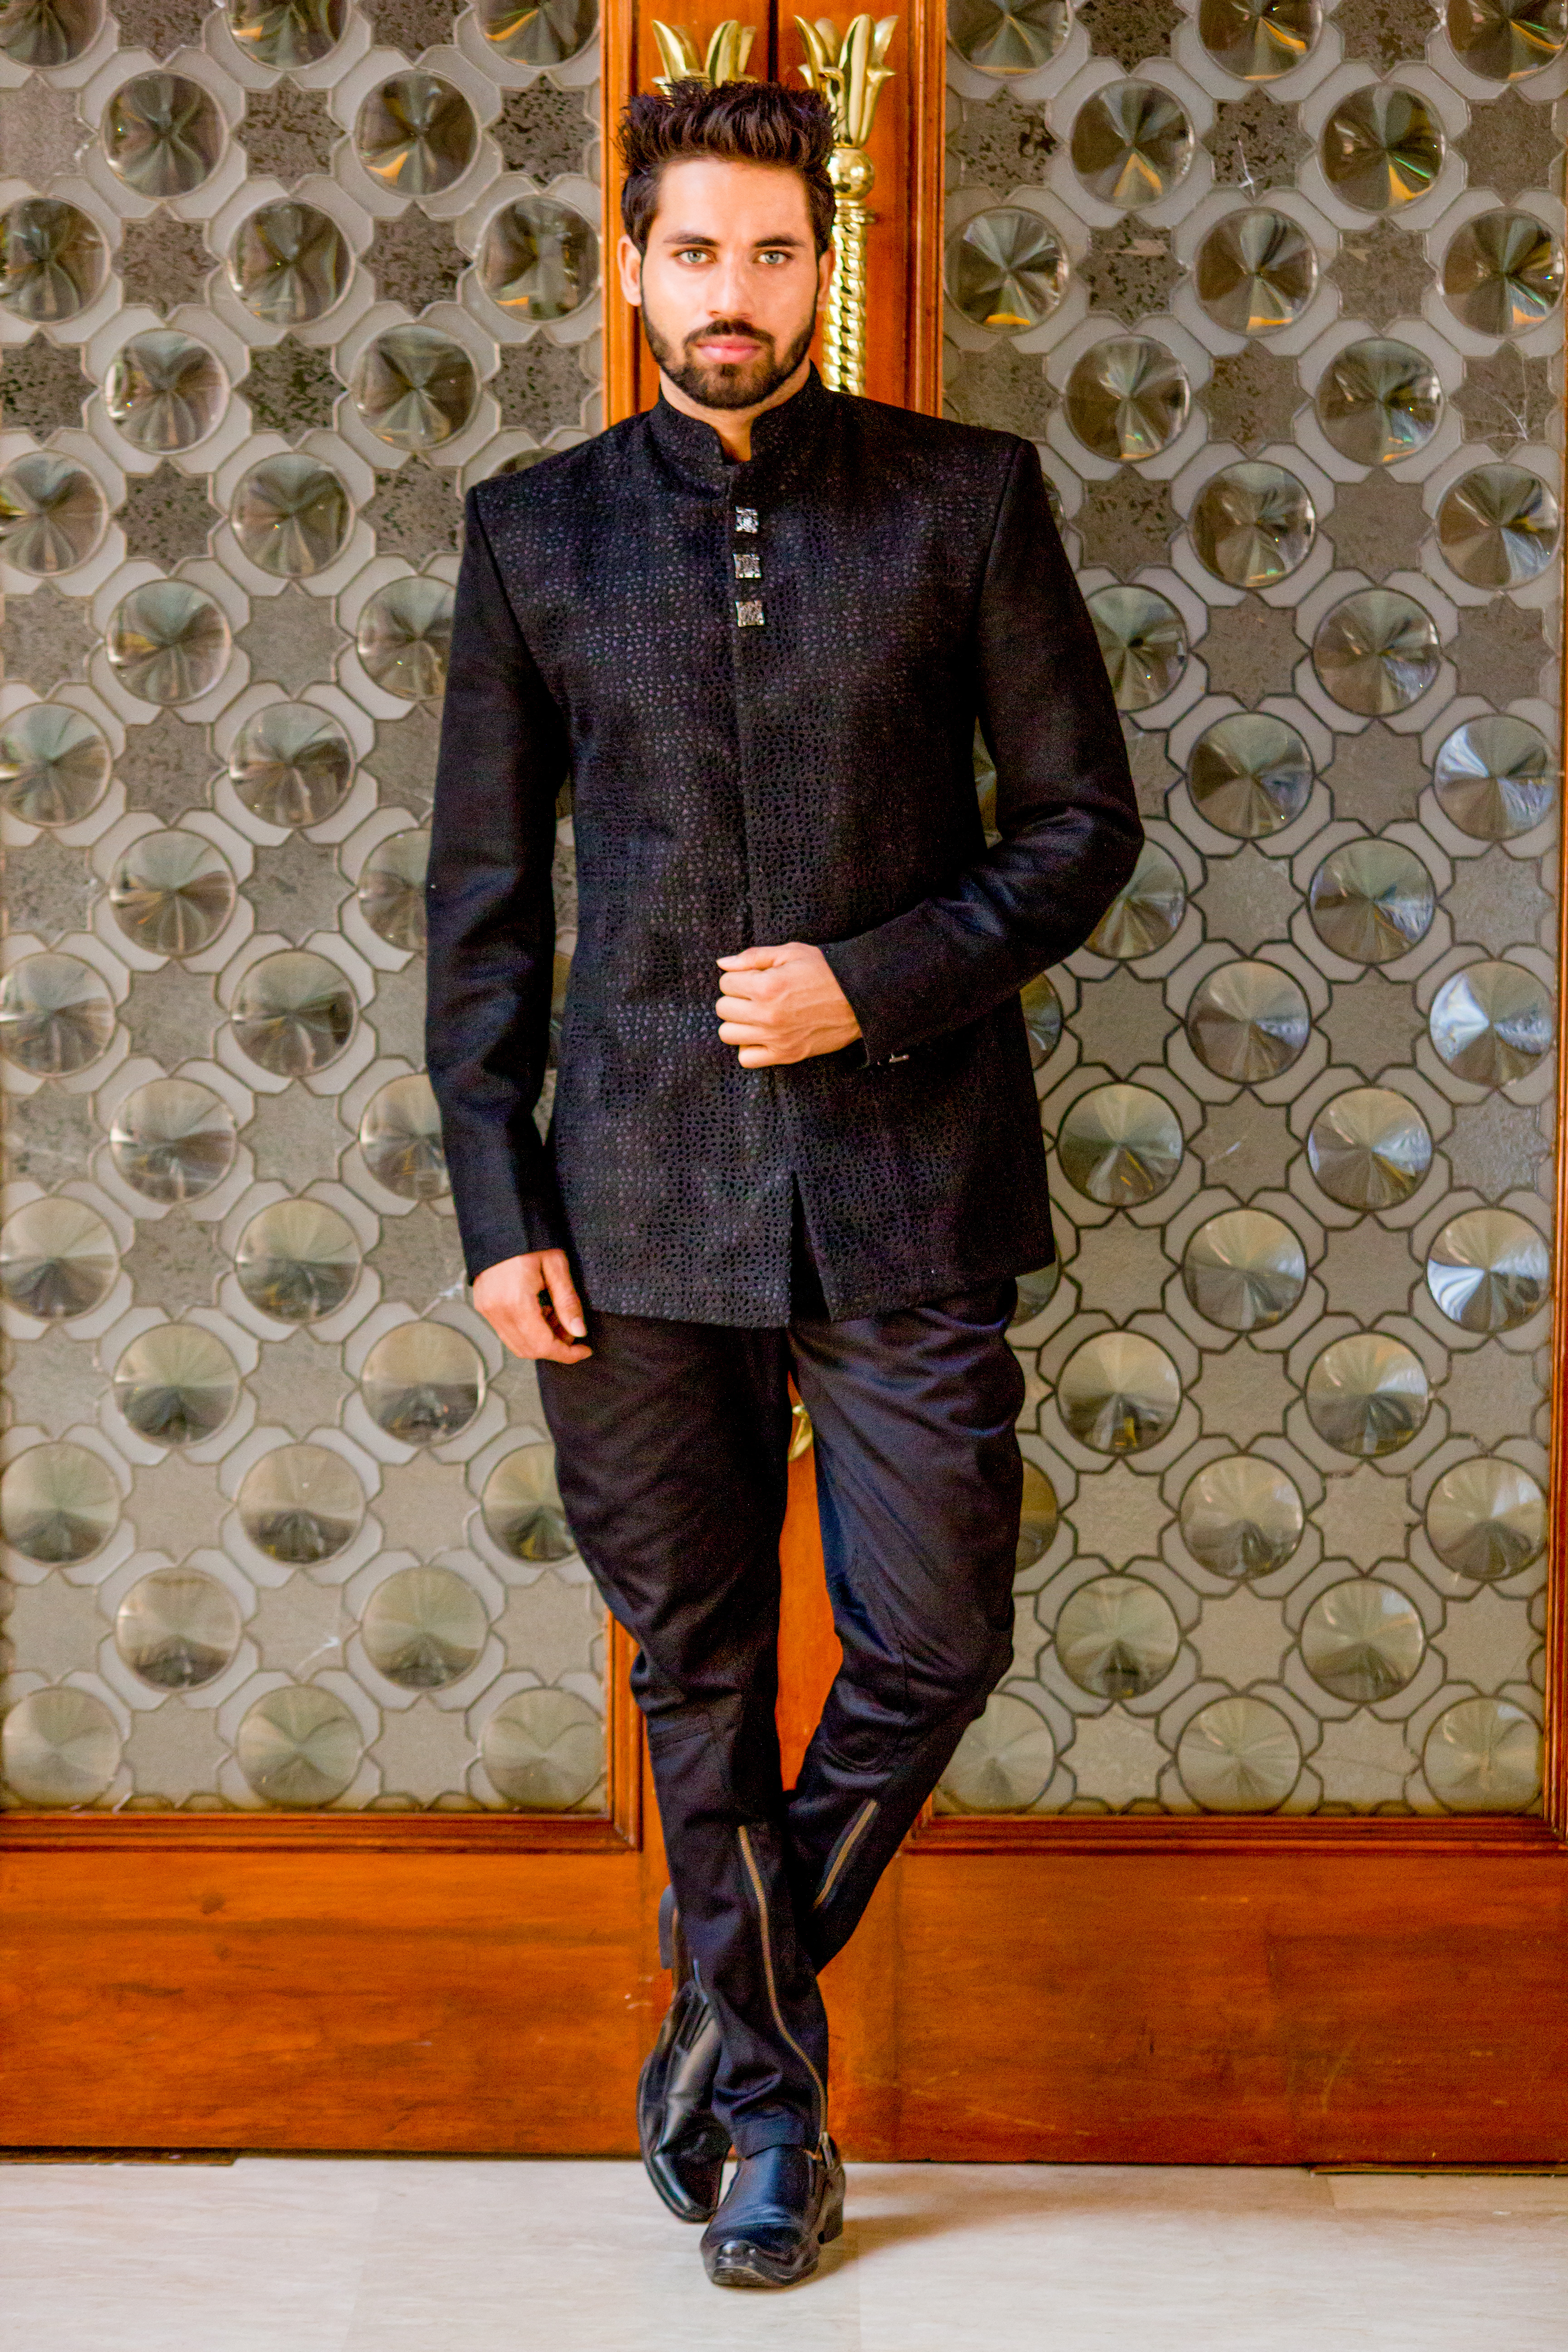 The Classic Leather Jacket Gets an Update | Manoviraj Khosla